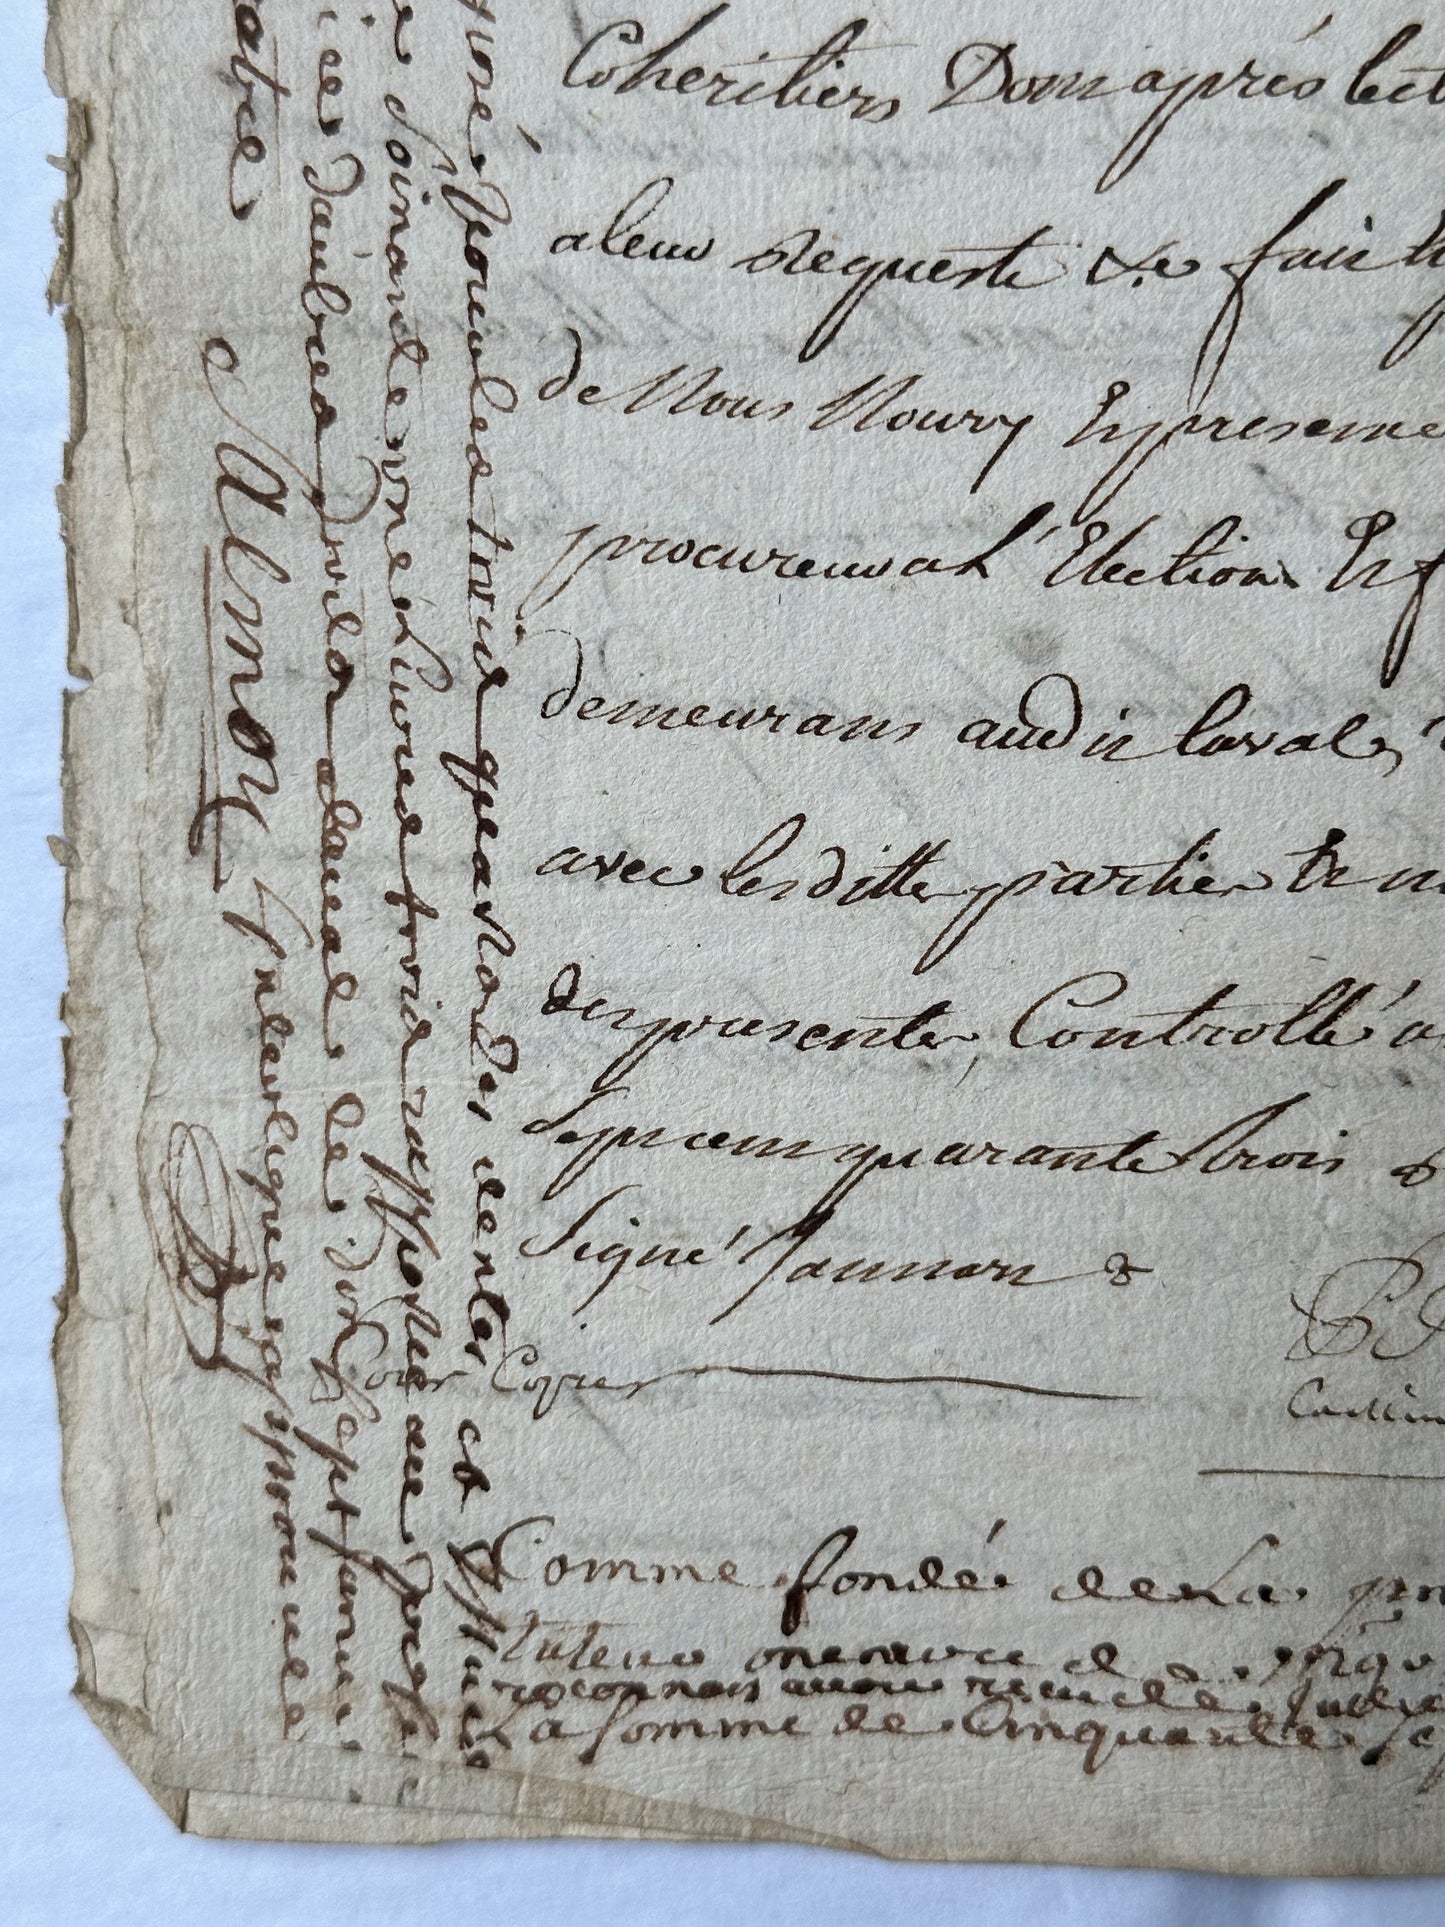 1743 French Legal Manuscript